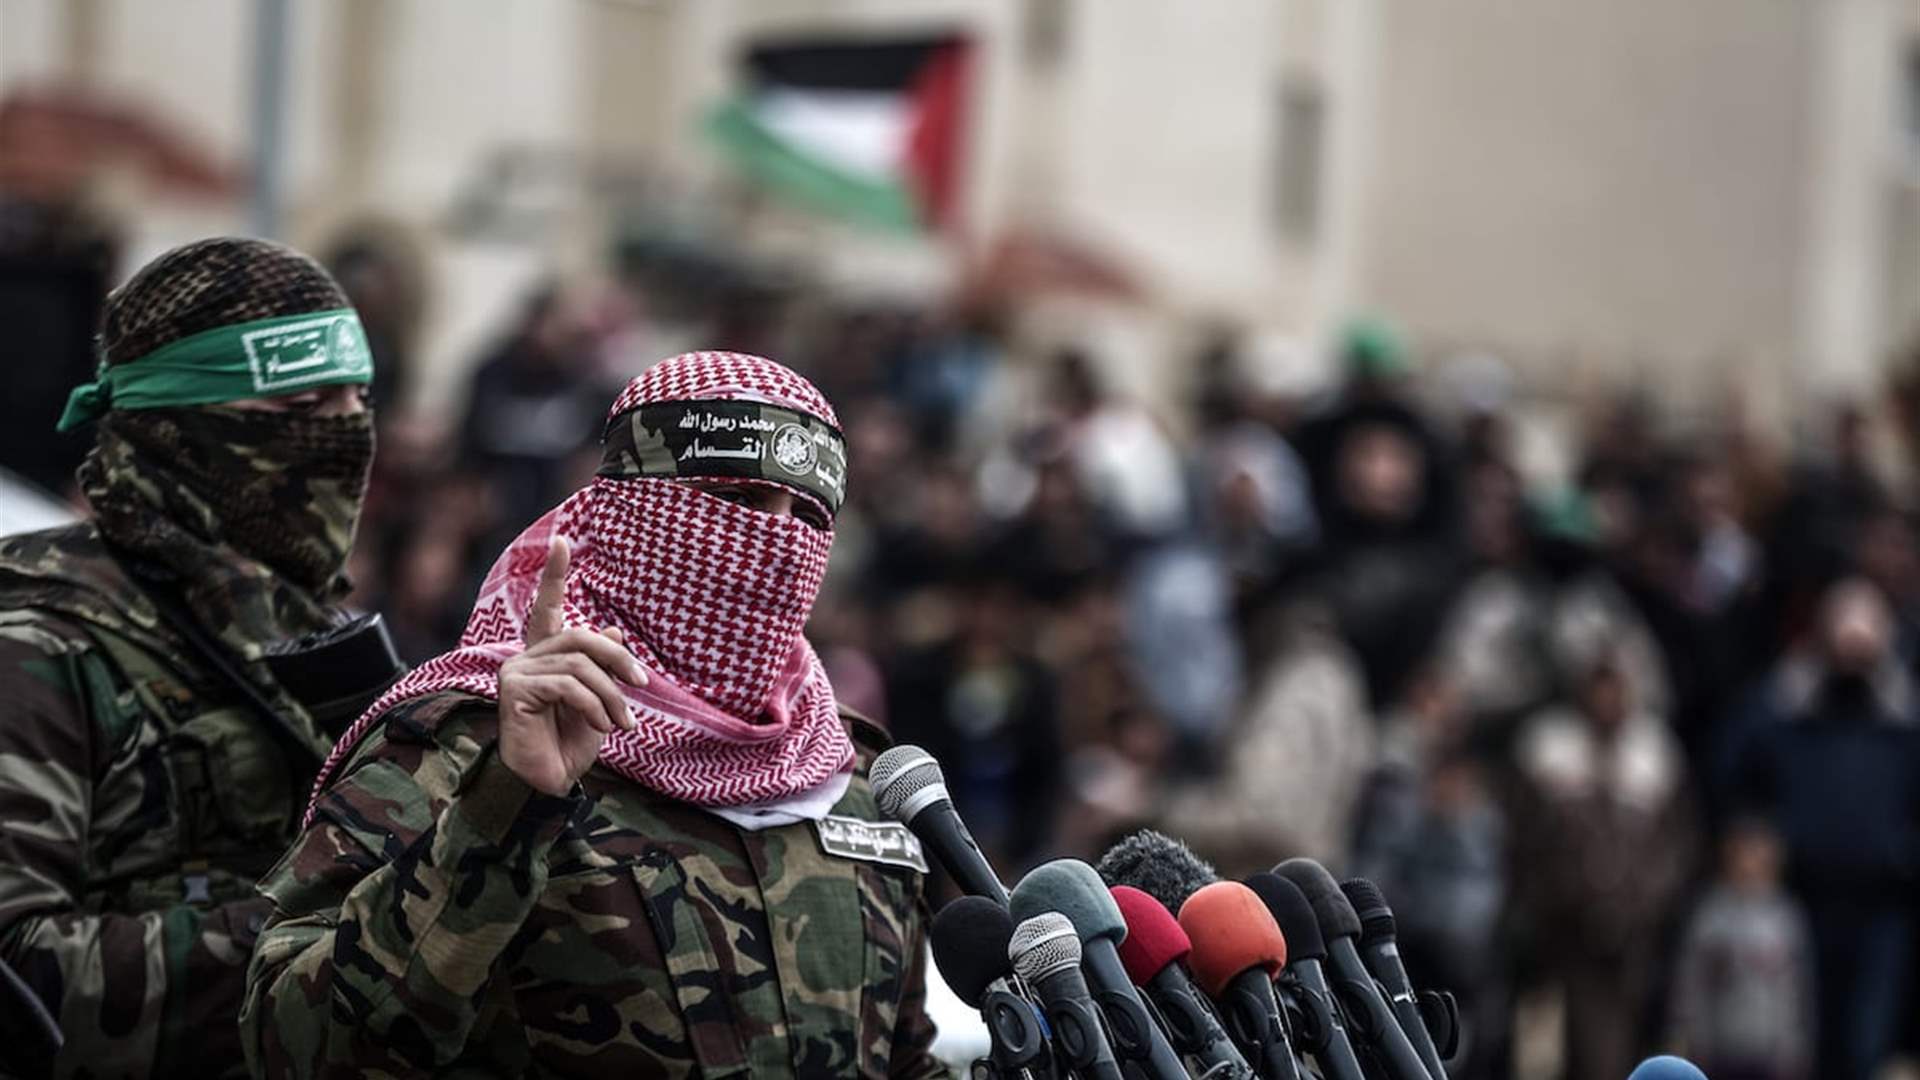 EU adds two top Hamas commanders to terrorist list